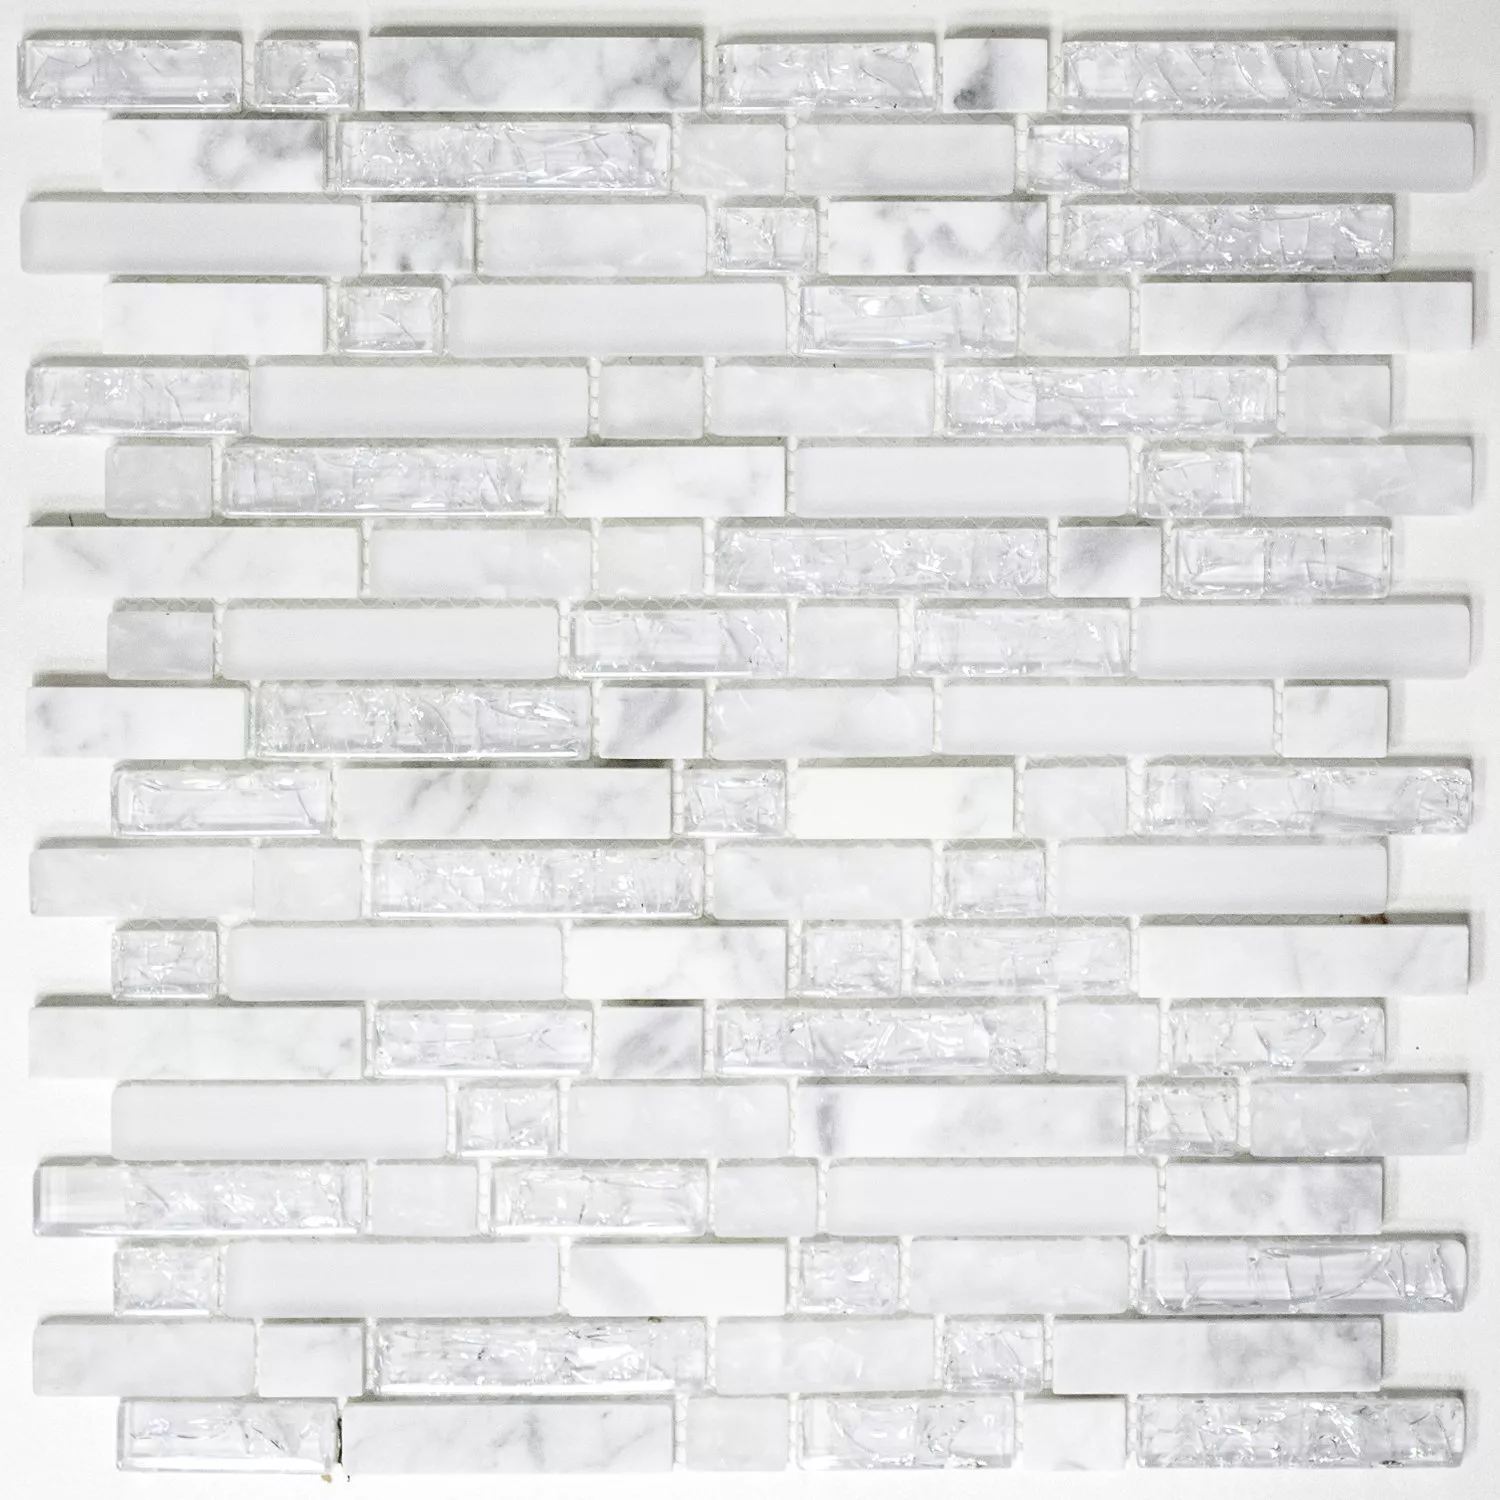 Sample Mosaic Tiles Glass Natural Stone SmoothBroken Glass White